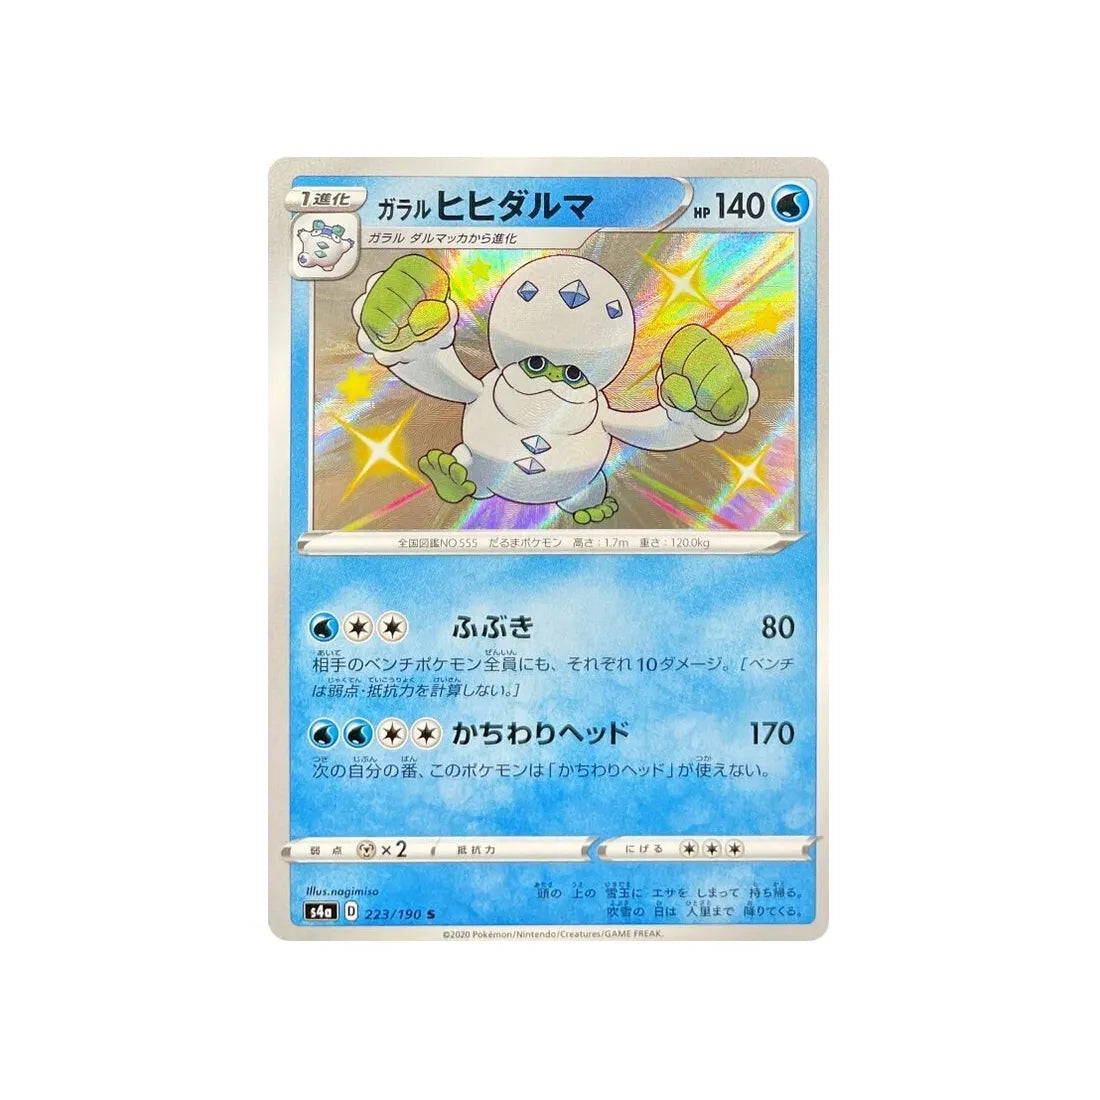 darumacho-de-galar-carte-pokemon-shiny-star-s4a-223